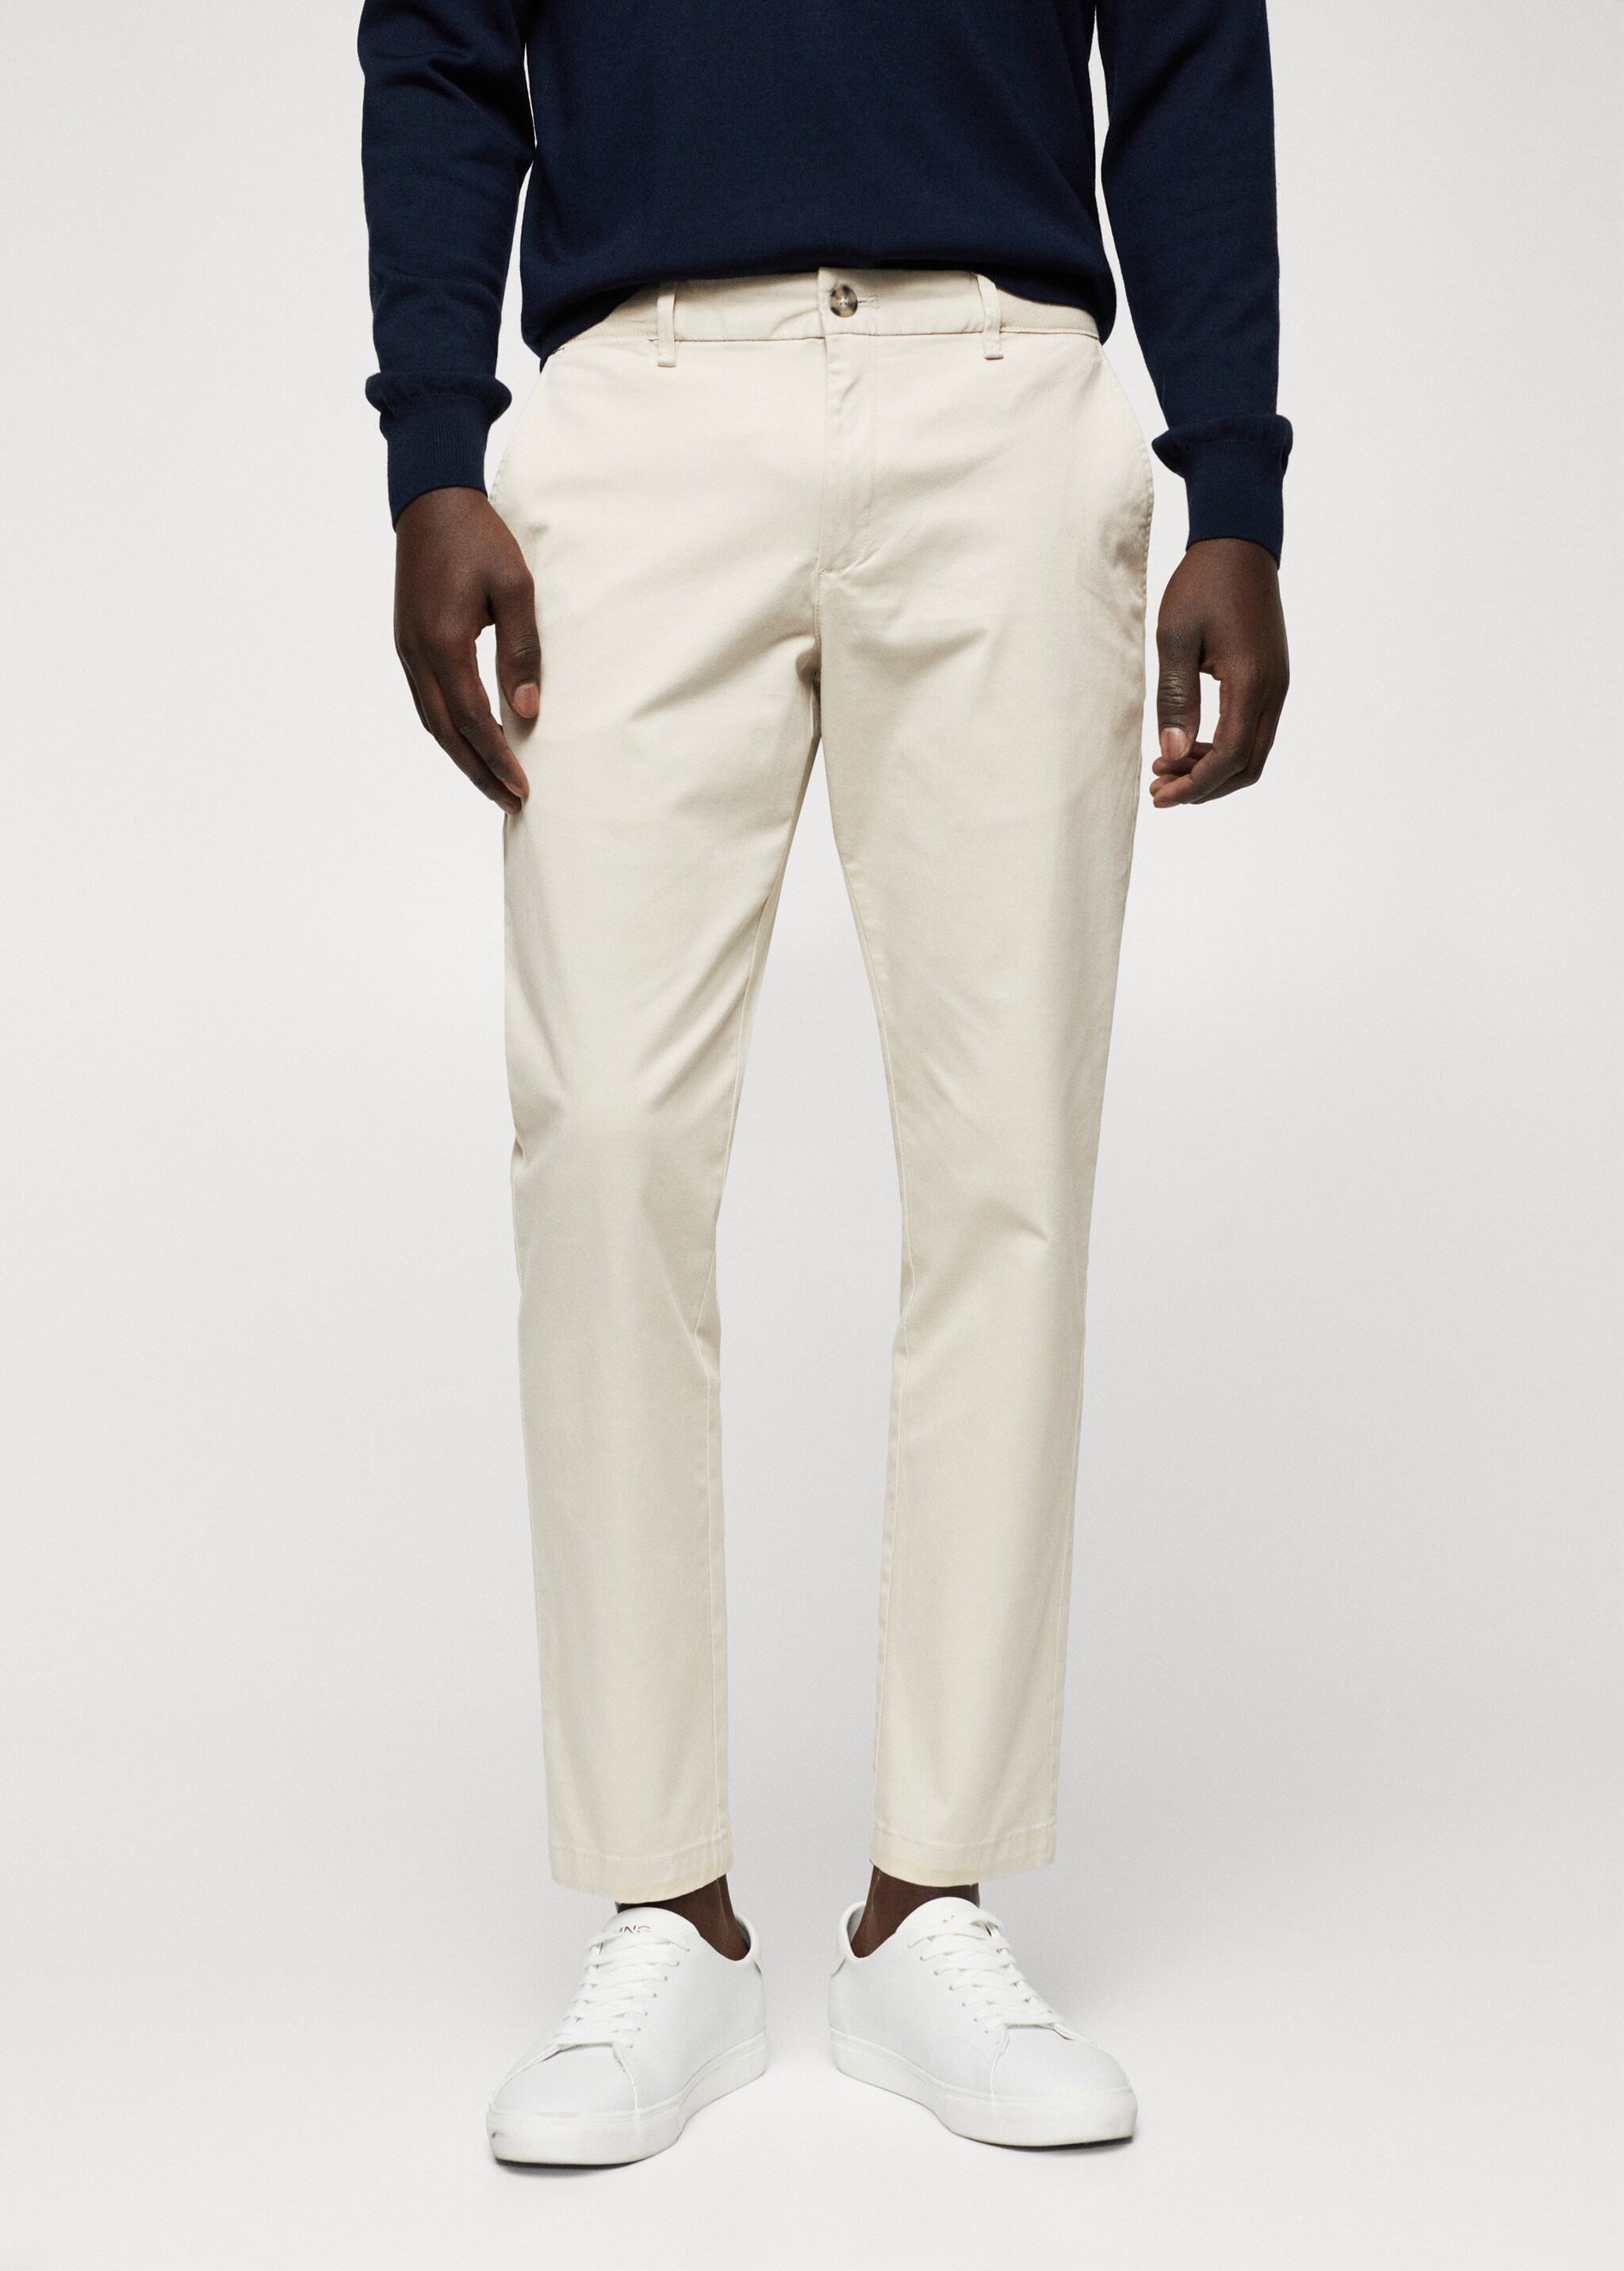 Cotton tapered crop pants - Medium plane